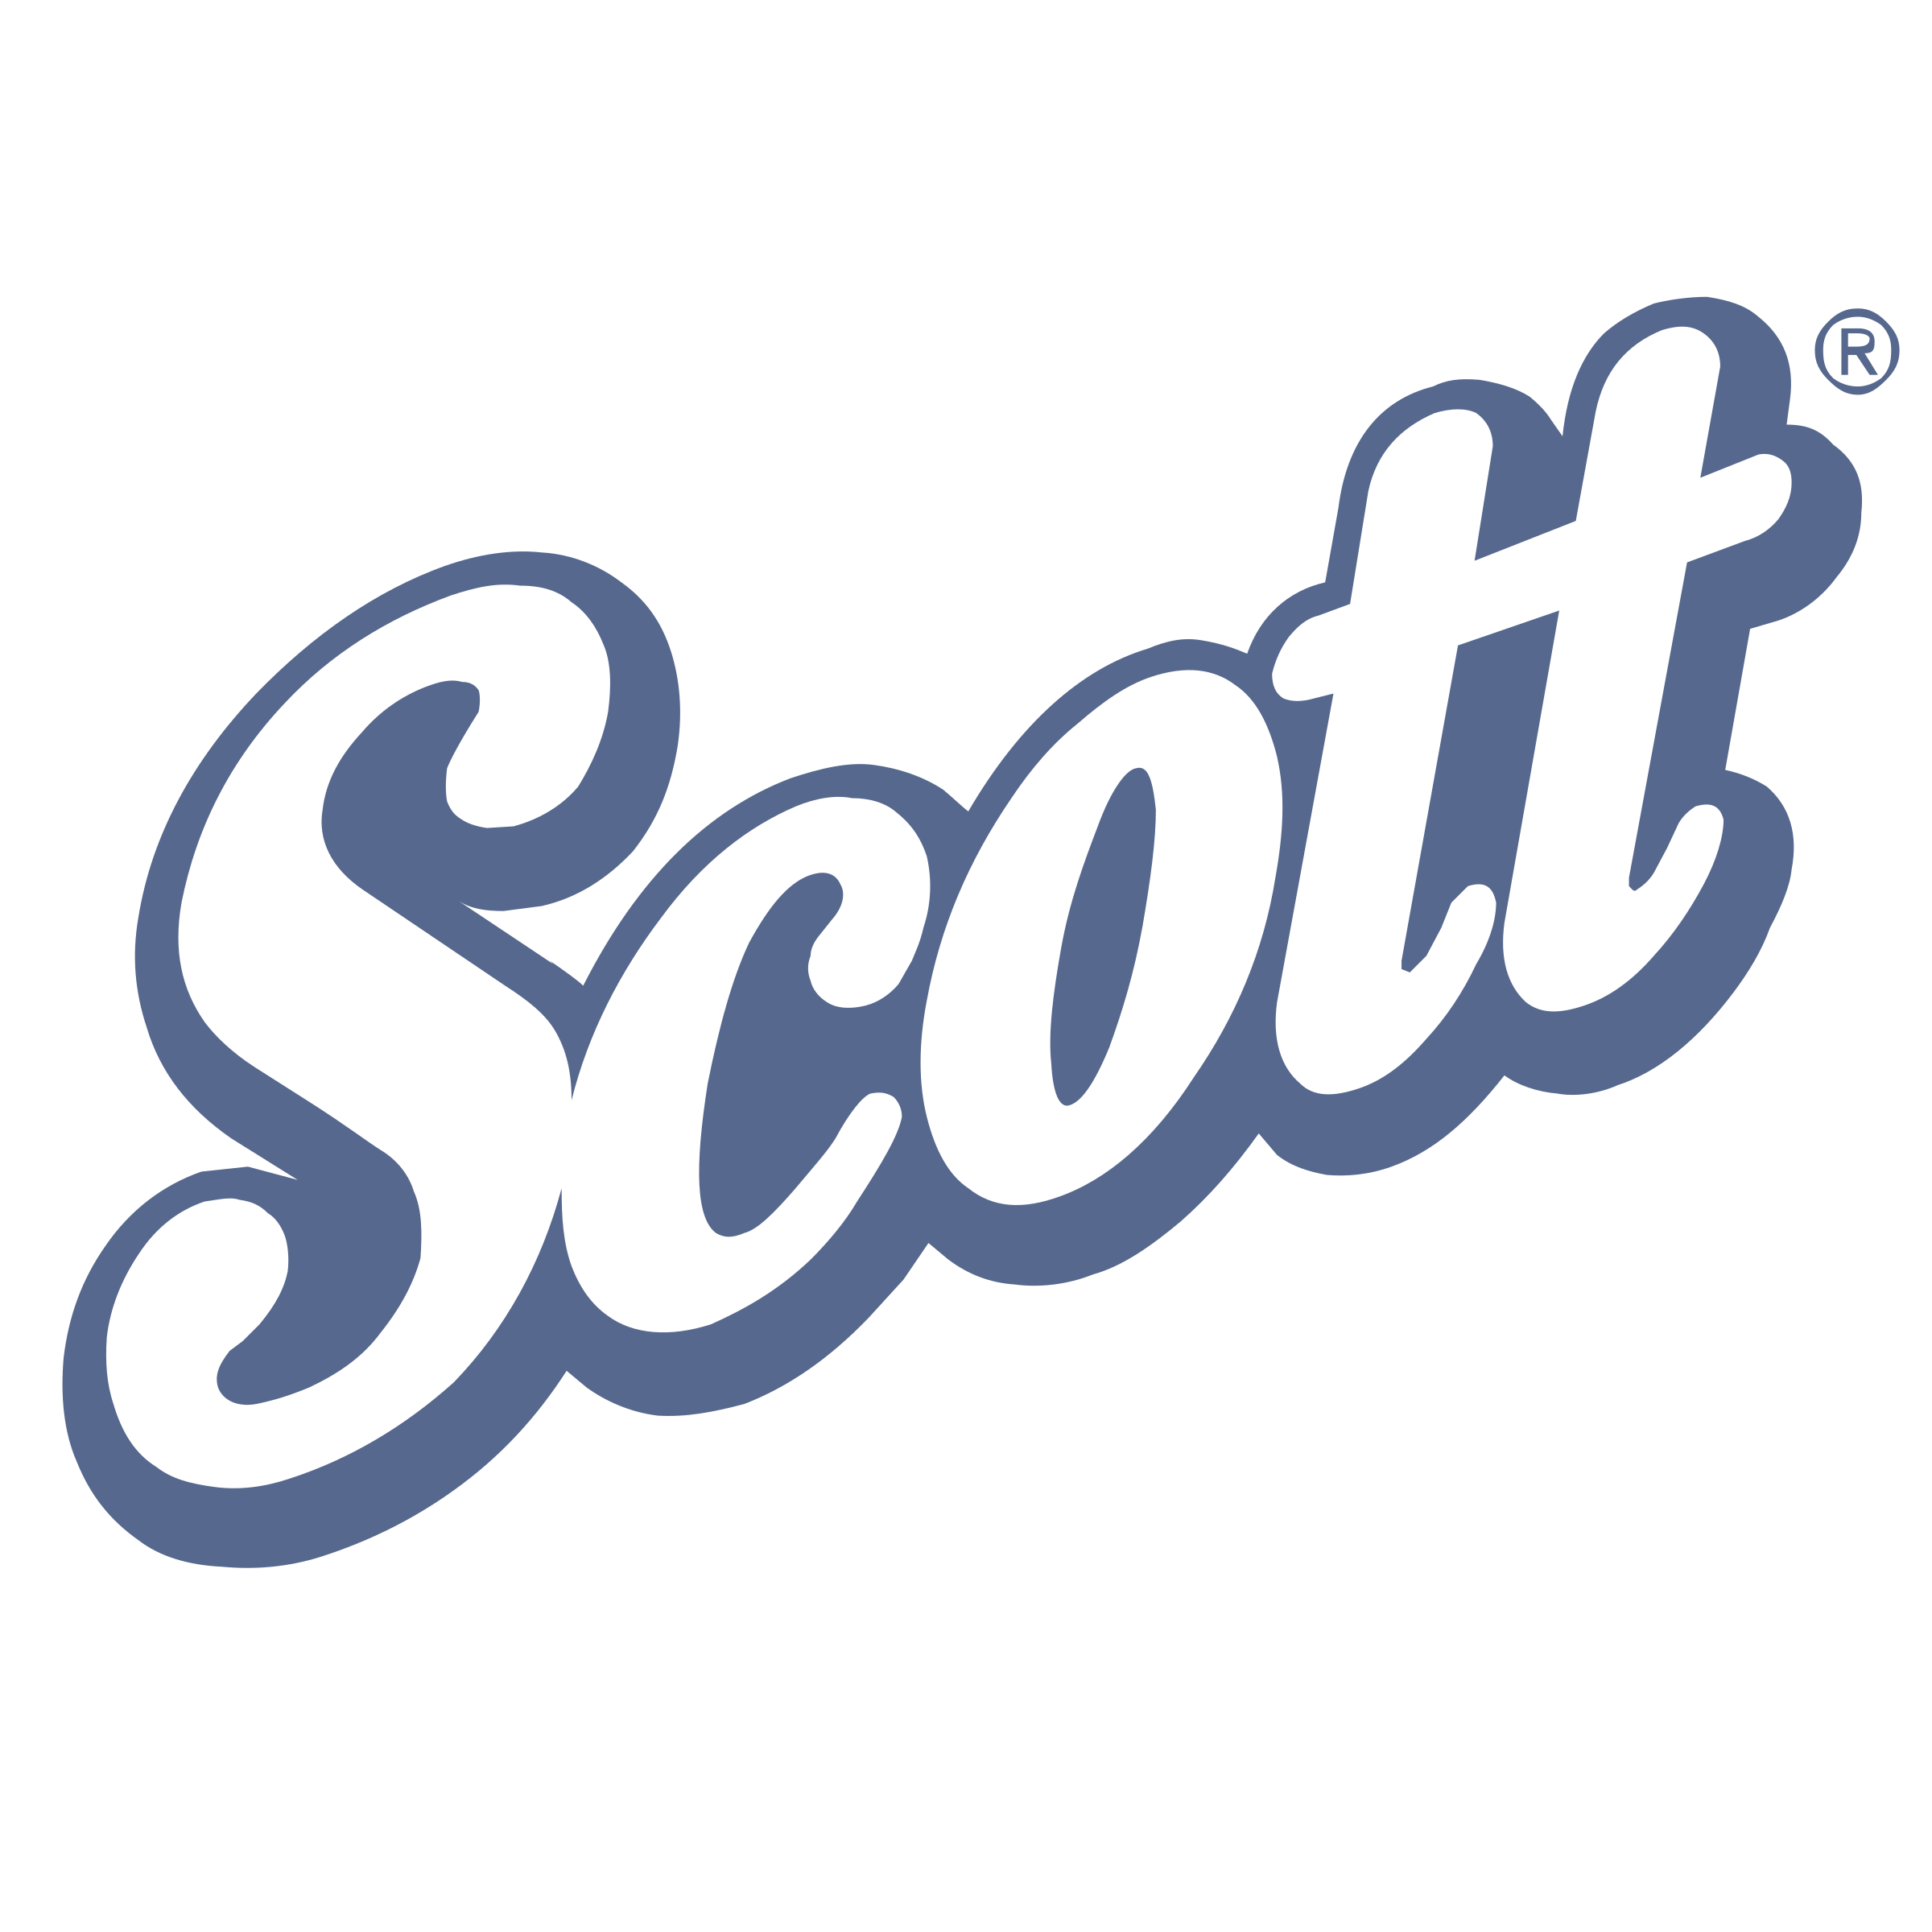 Scott Logo - Scott Logo PNG Transparent & SVG Vector - Freebie Supply